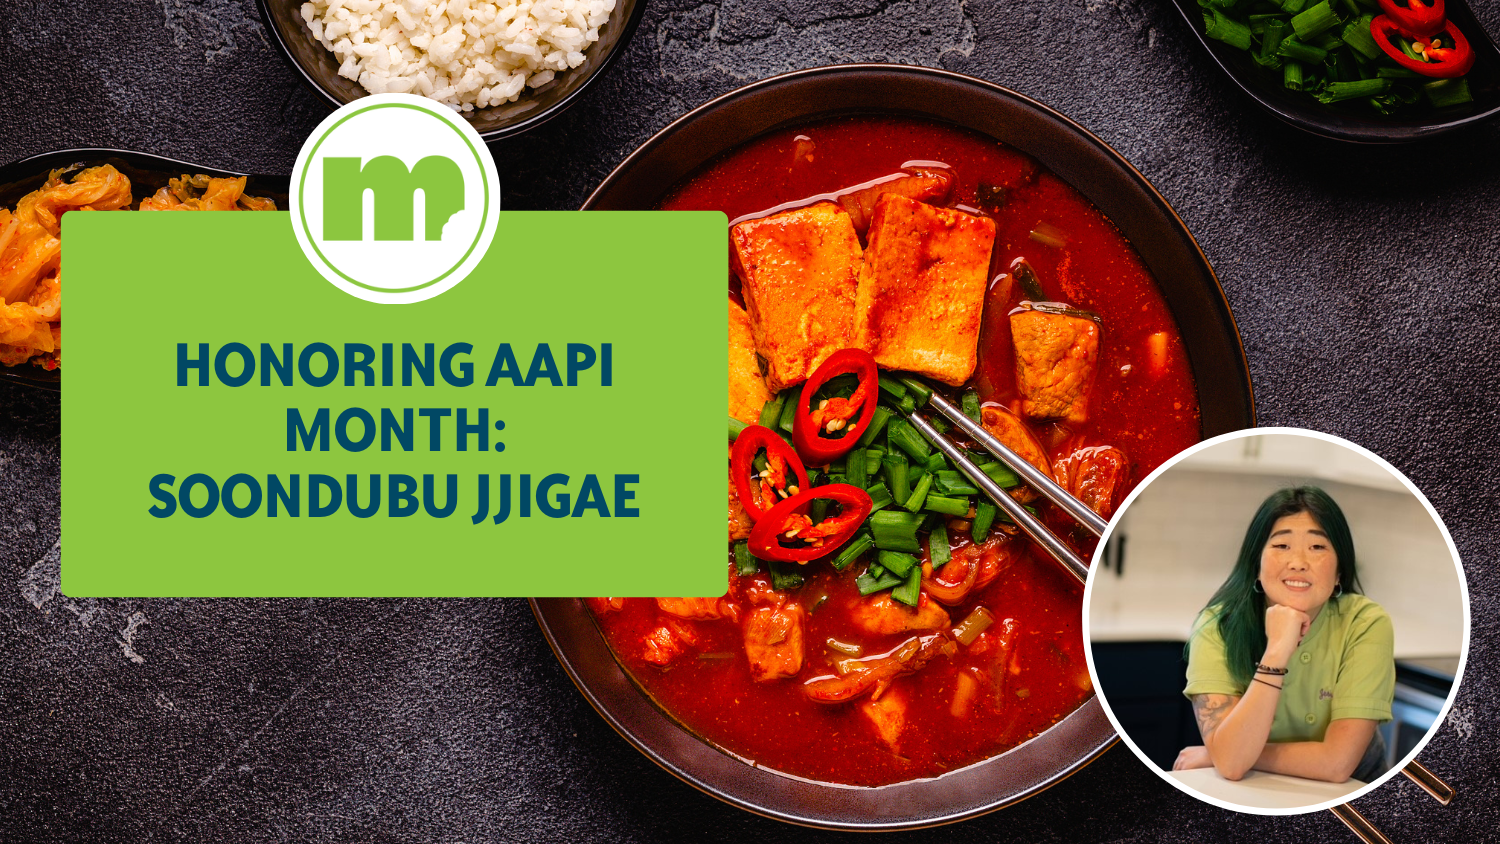 Image for Honoring AAPI Month: Soondubu Jjigae